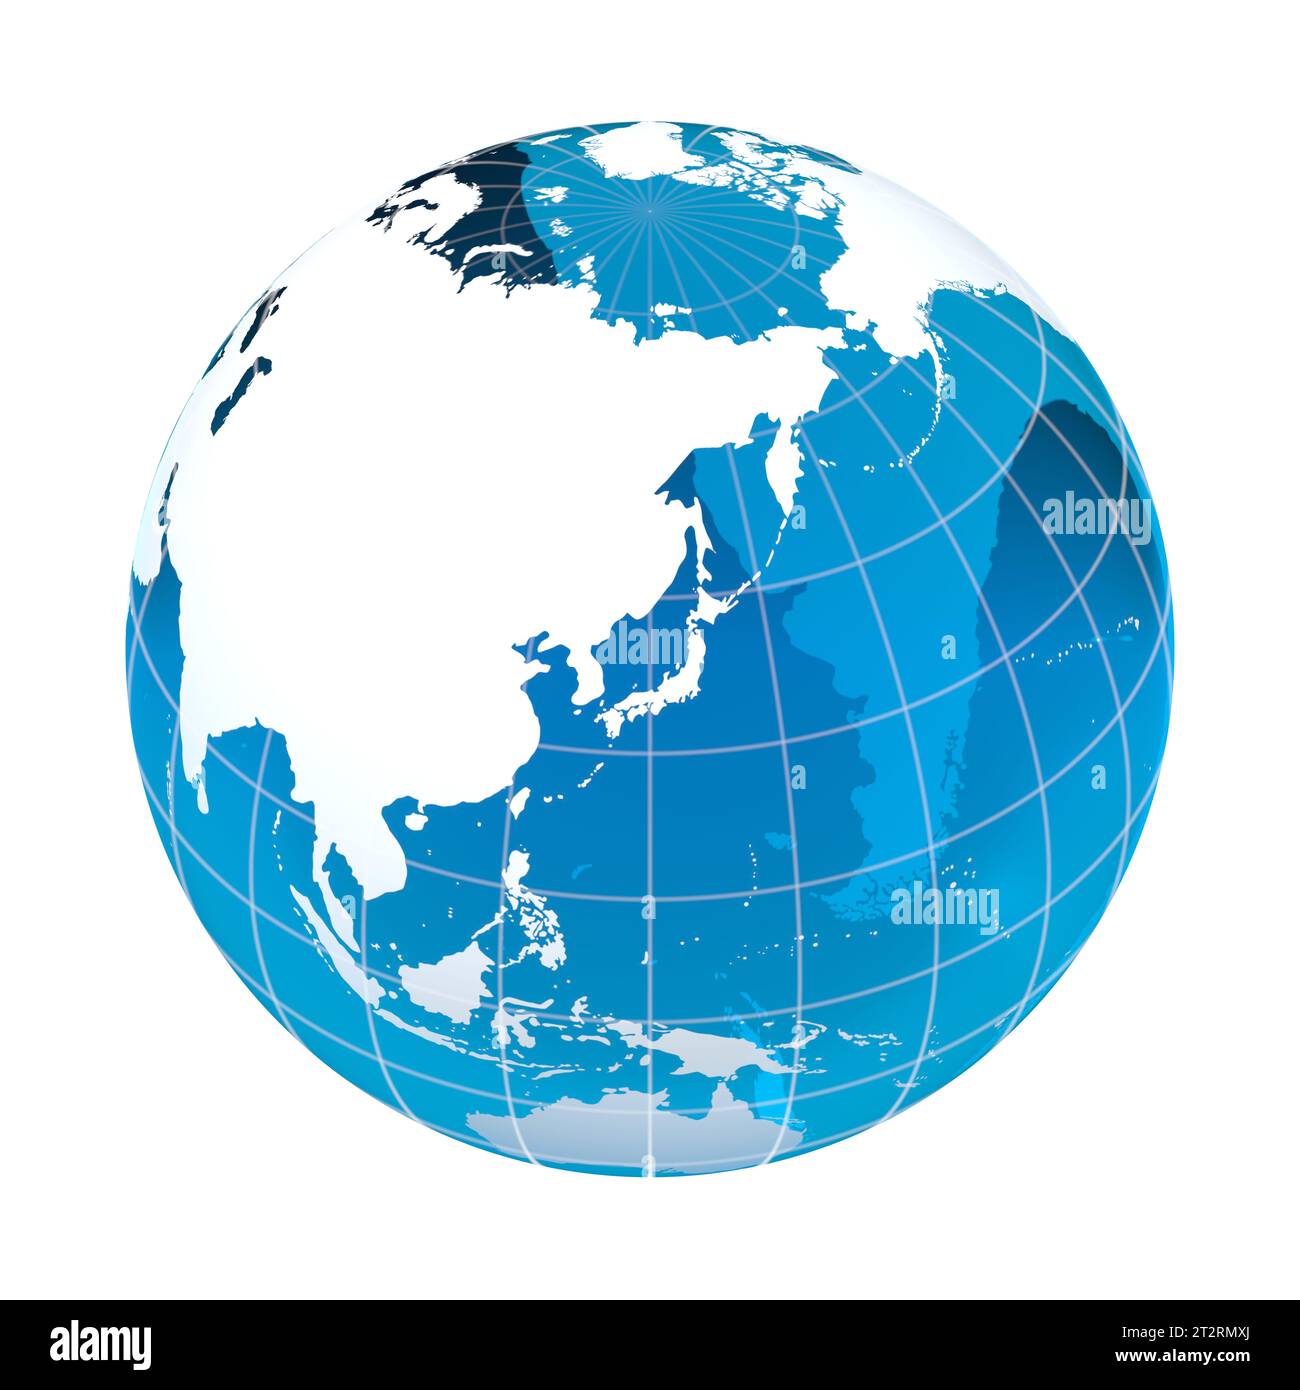 Japan, Asia, earth globe, world map Stock Photo